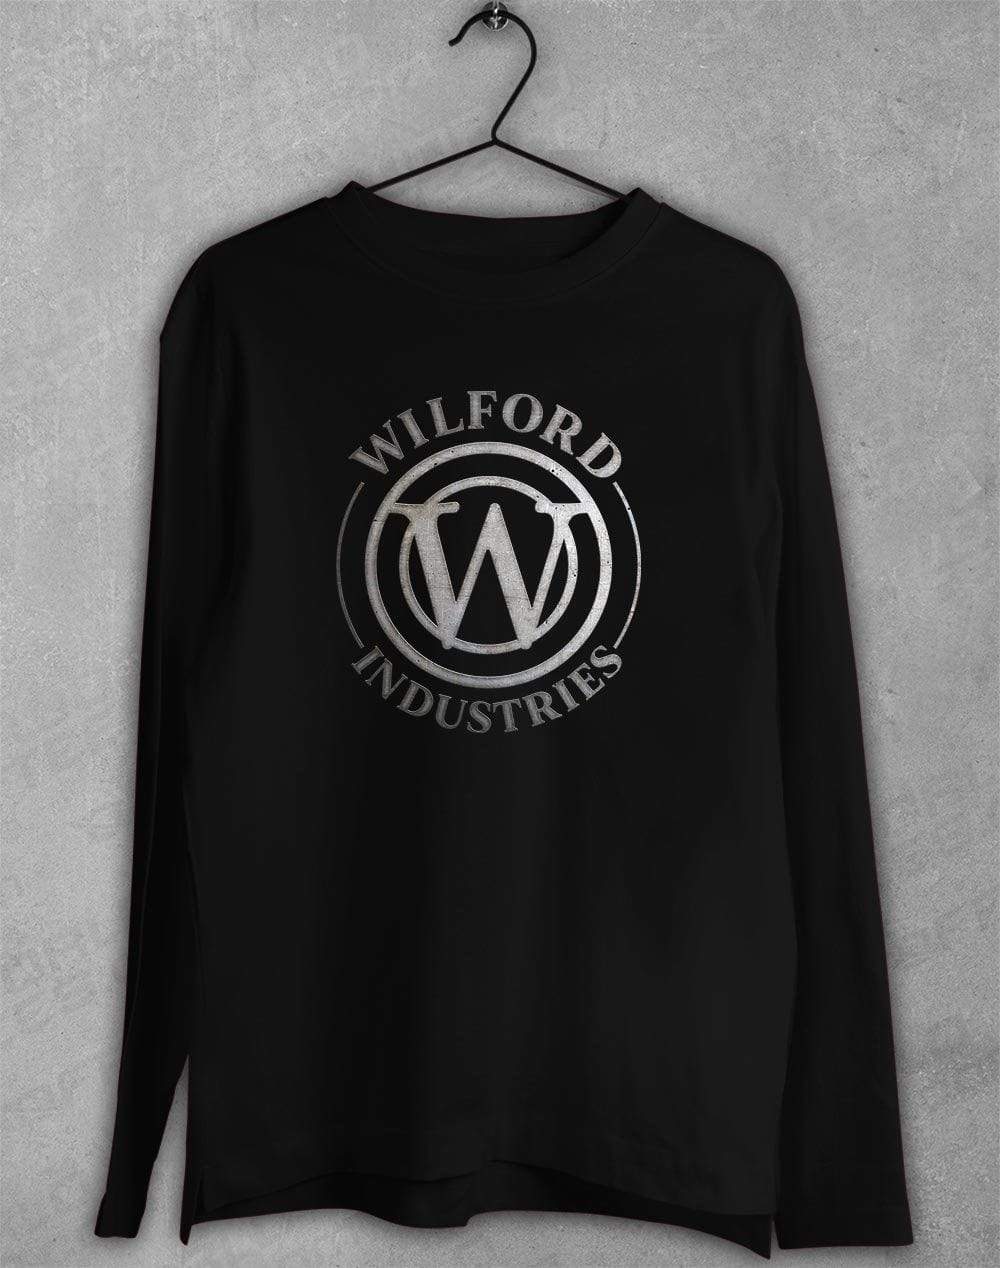 Wilford Industries Long Sleeve T-Shirt S / Black  - Off World Tees